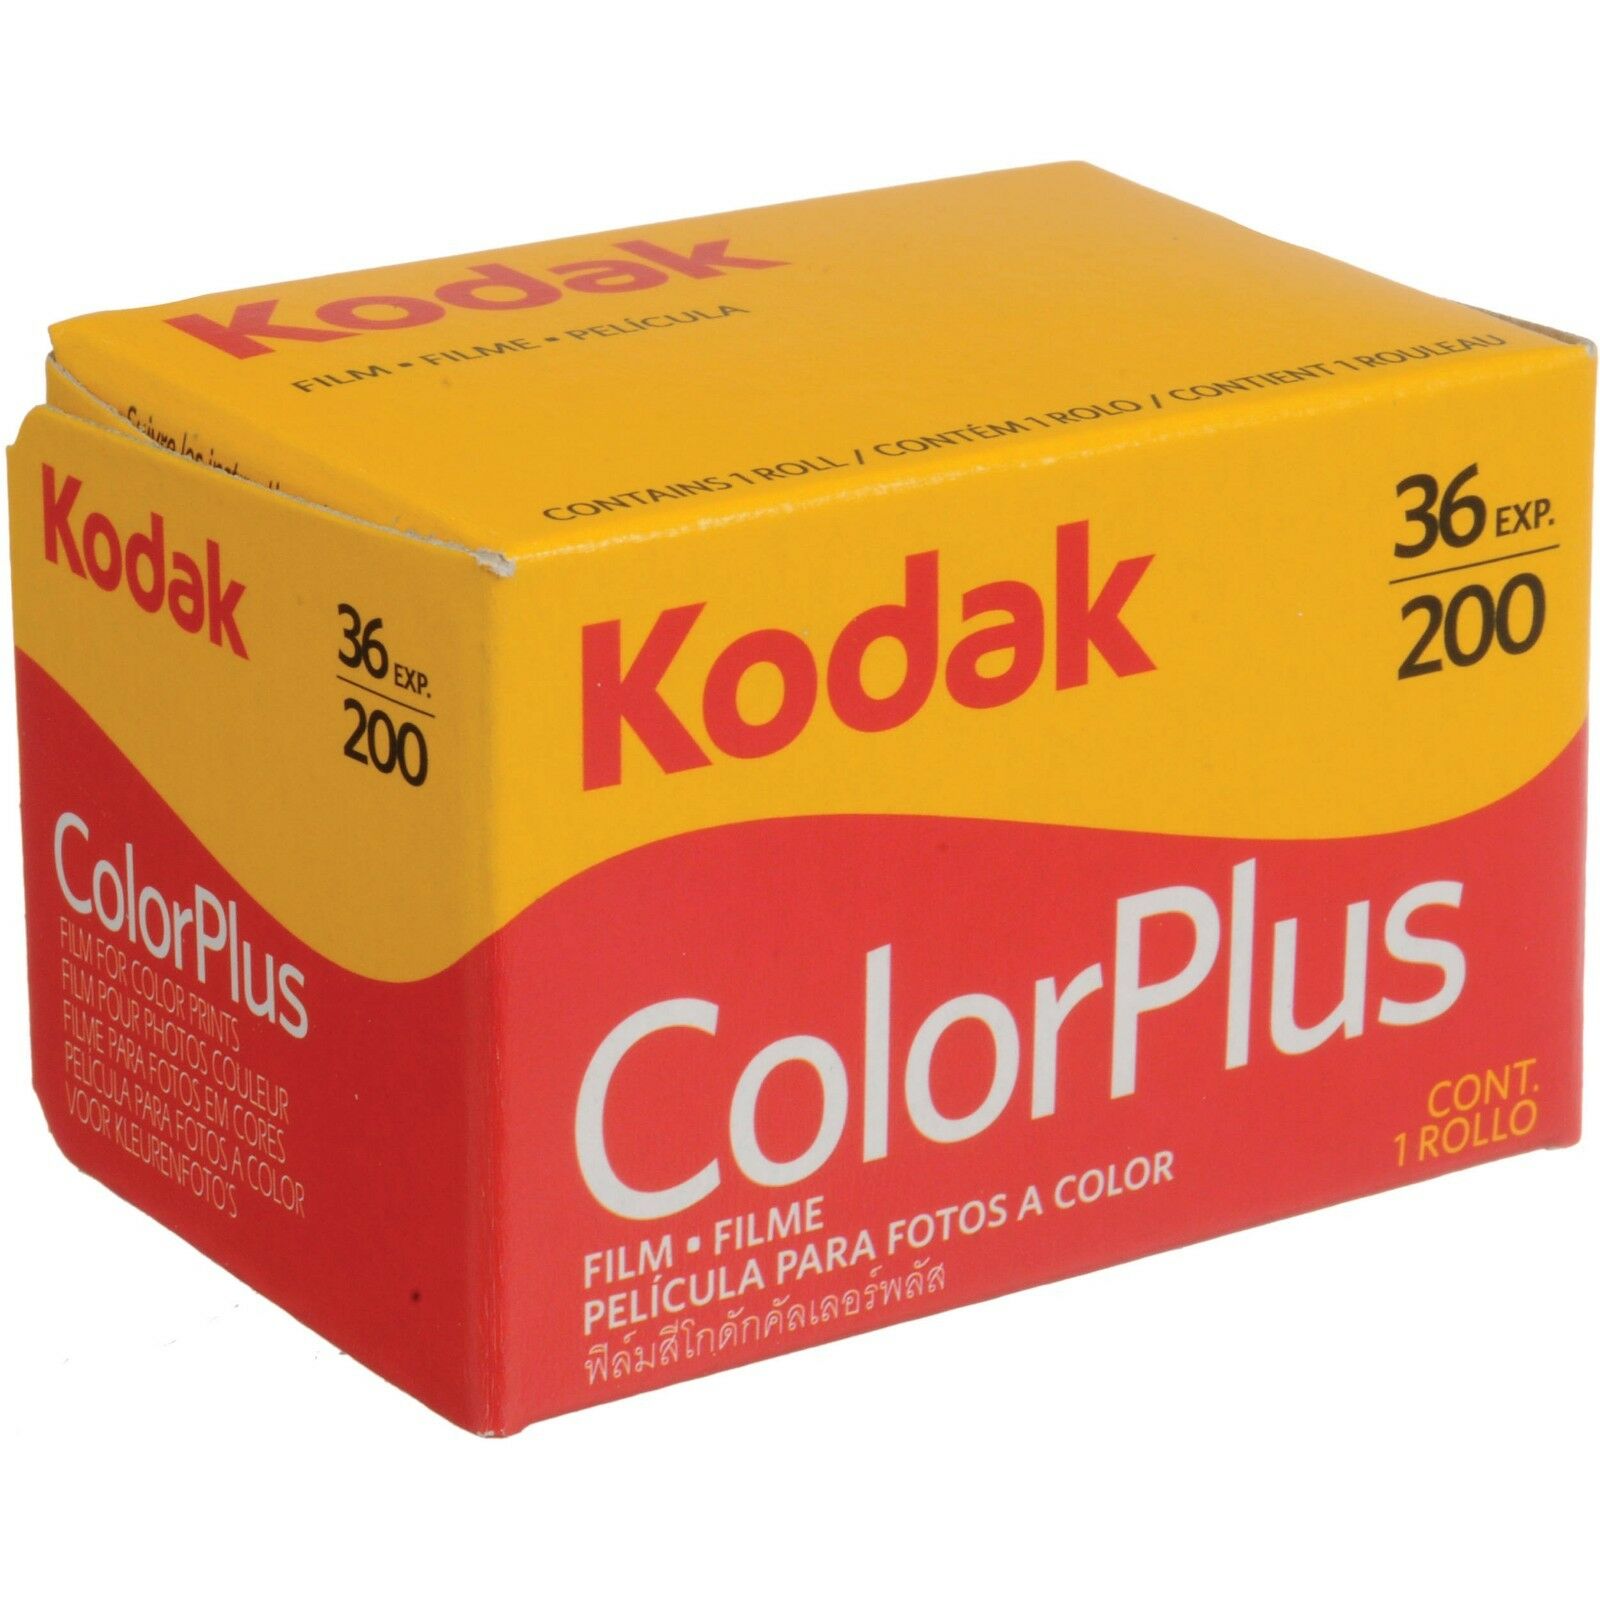 Kodak ColorPlus 200 asa 36 exposure 35mm Film